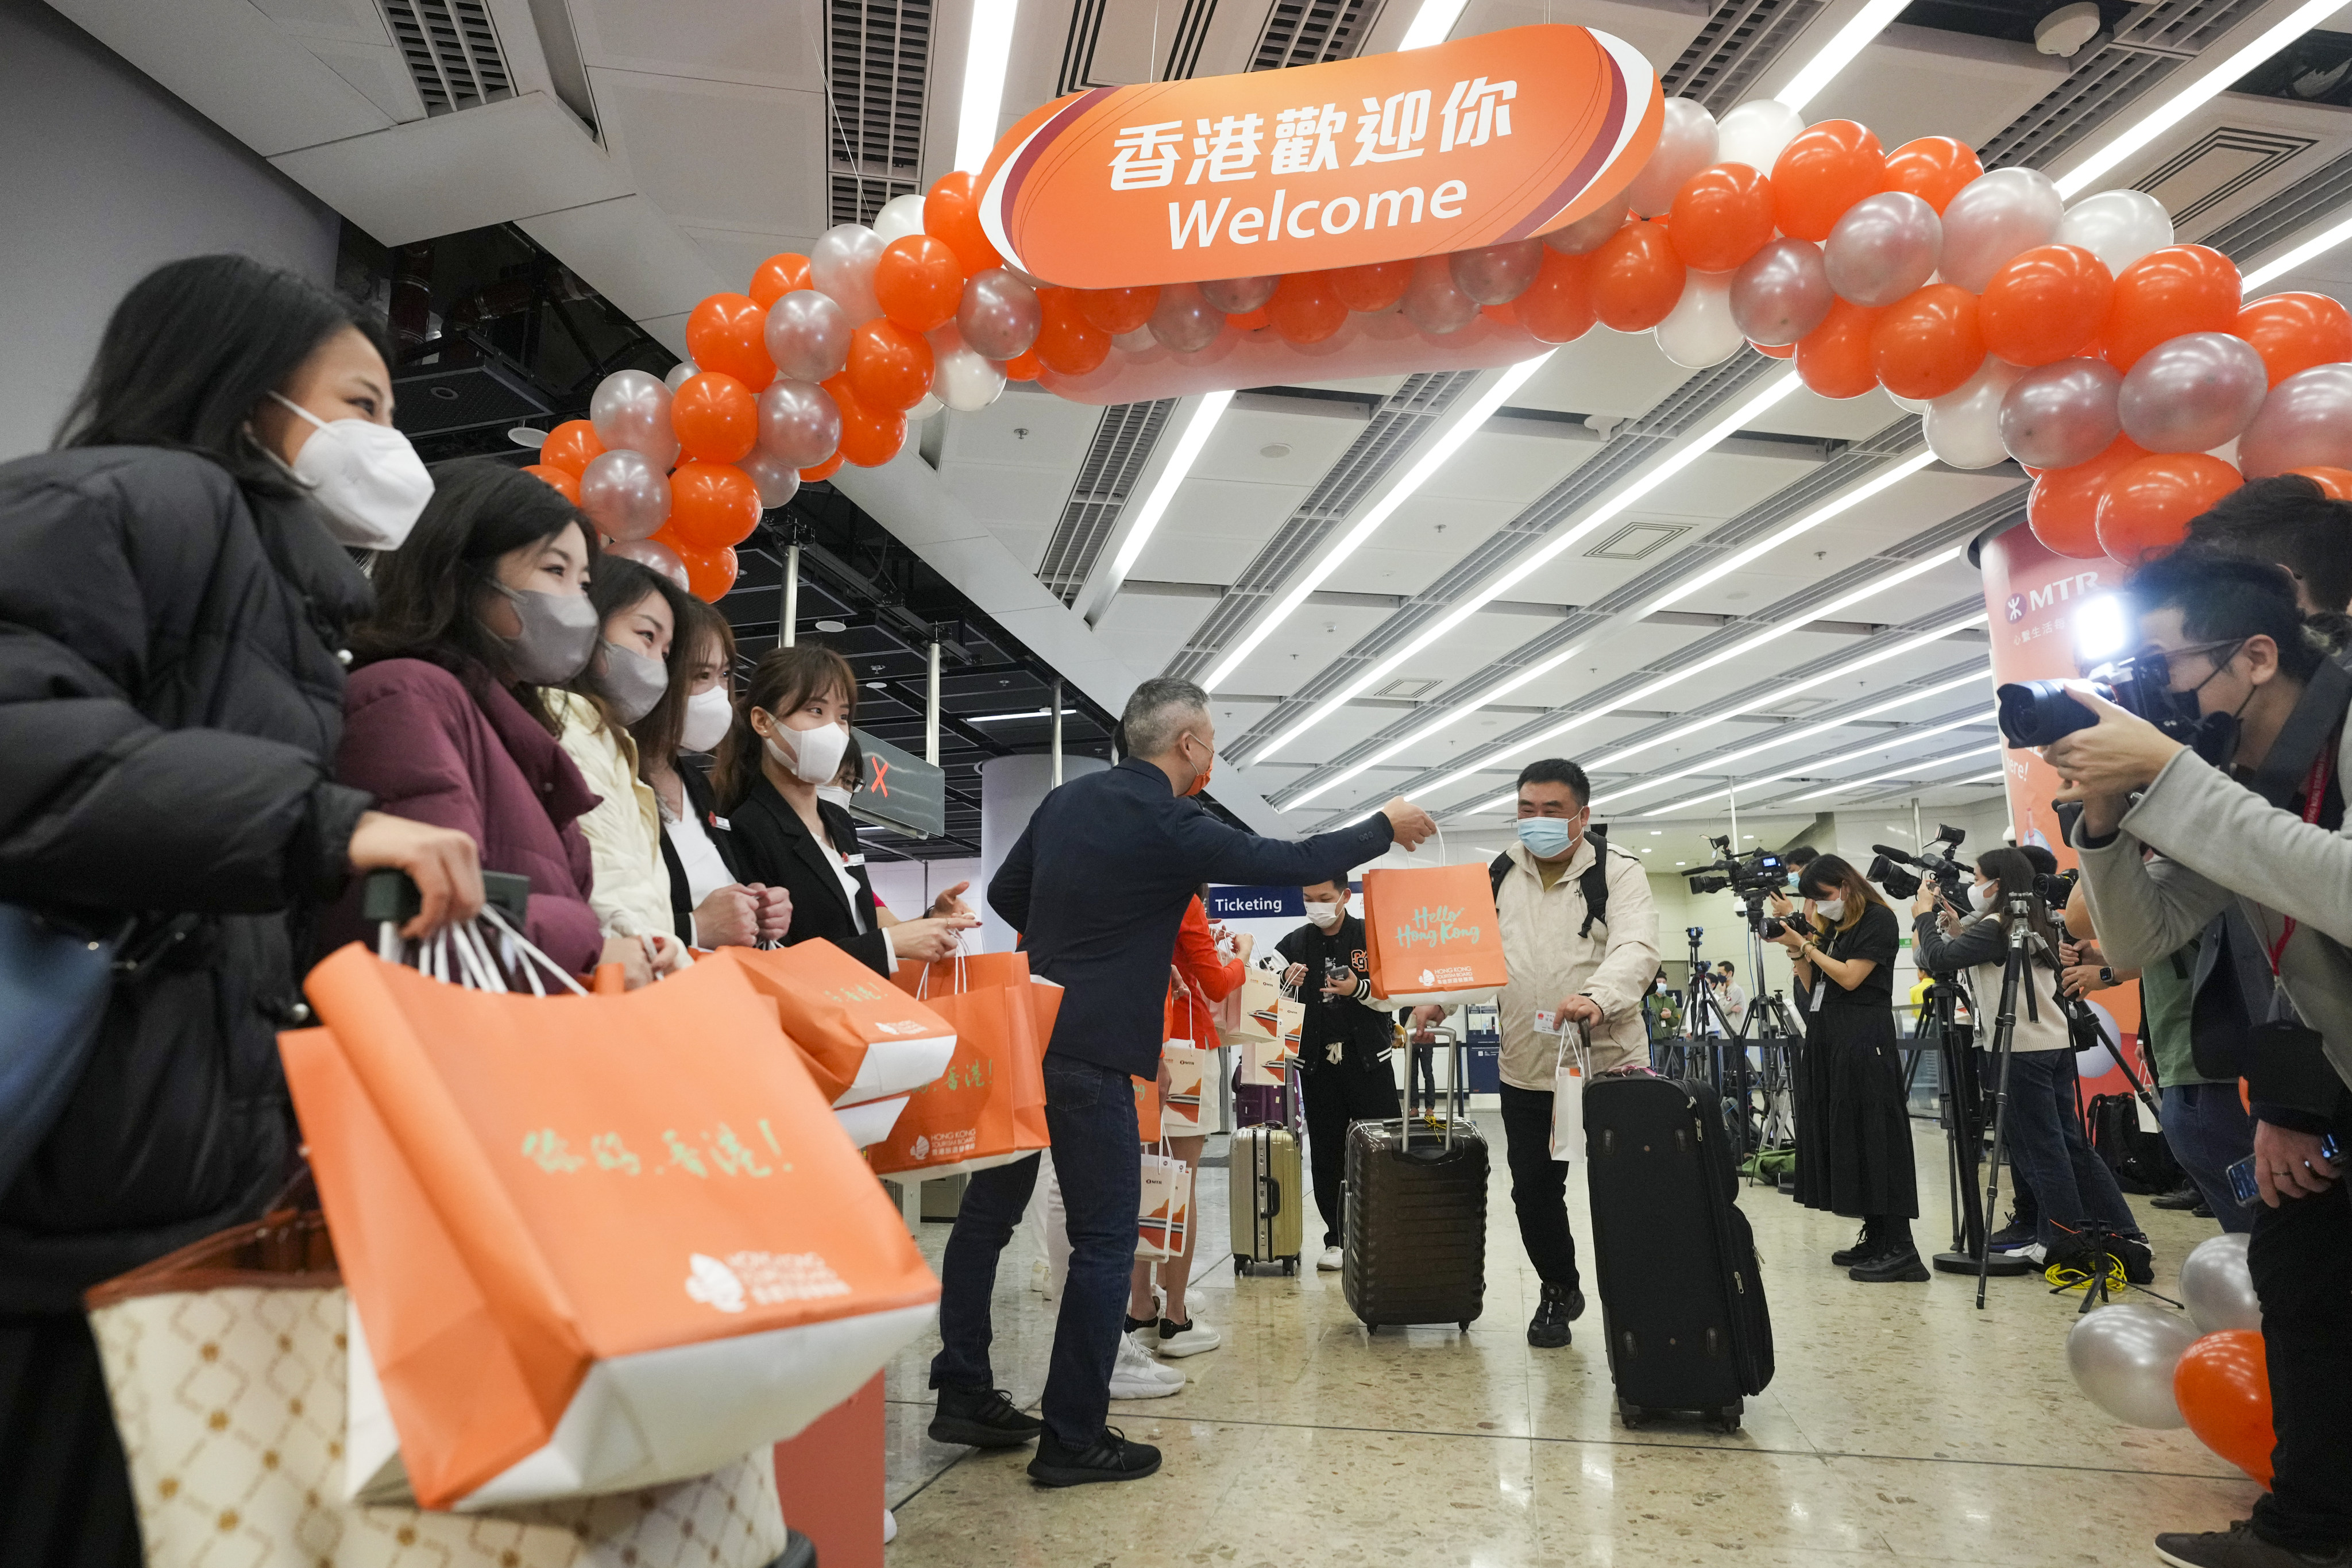 Passengers arrive at Hong Kong West Kowloon station on January 15, as high-speed rail services are resumed between the mainland and Hong Kong. Photo: Sam Tsang